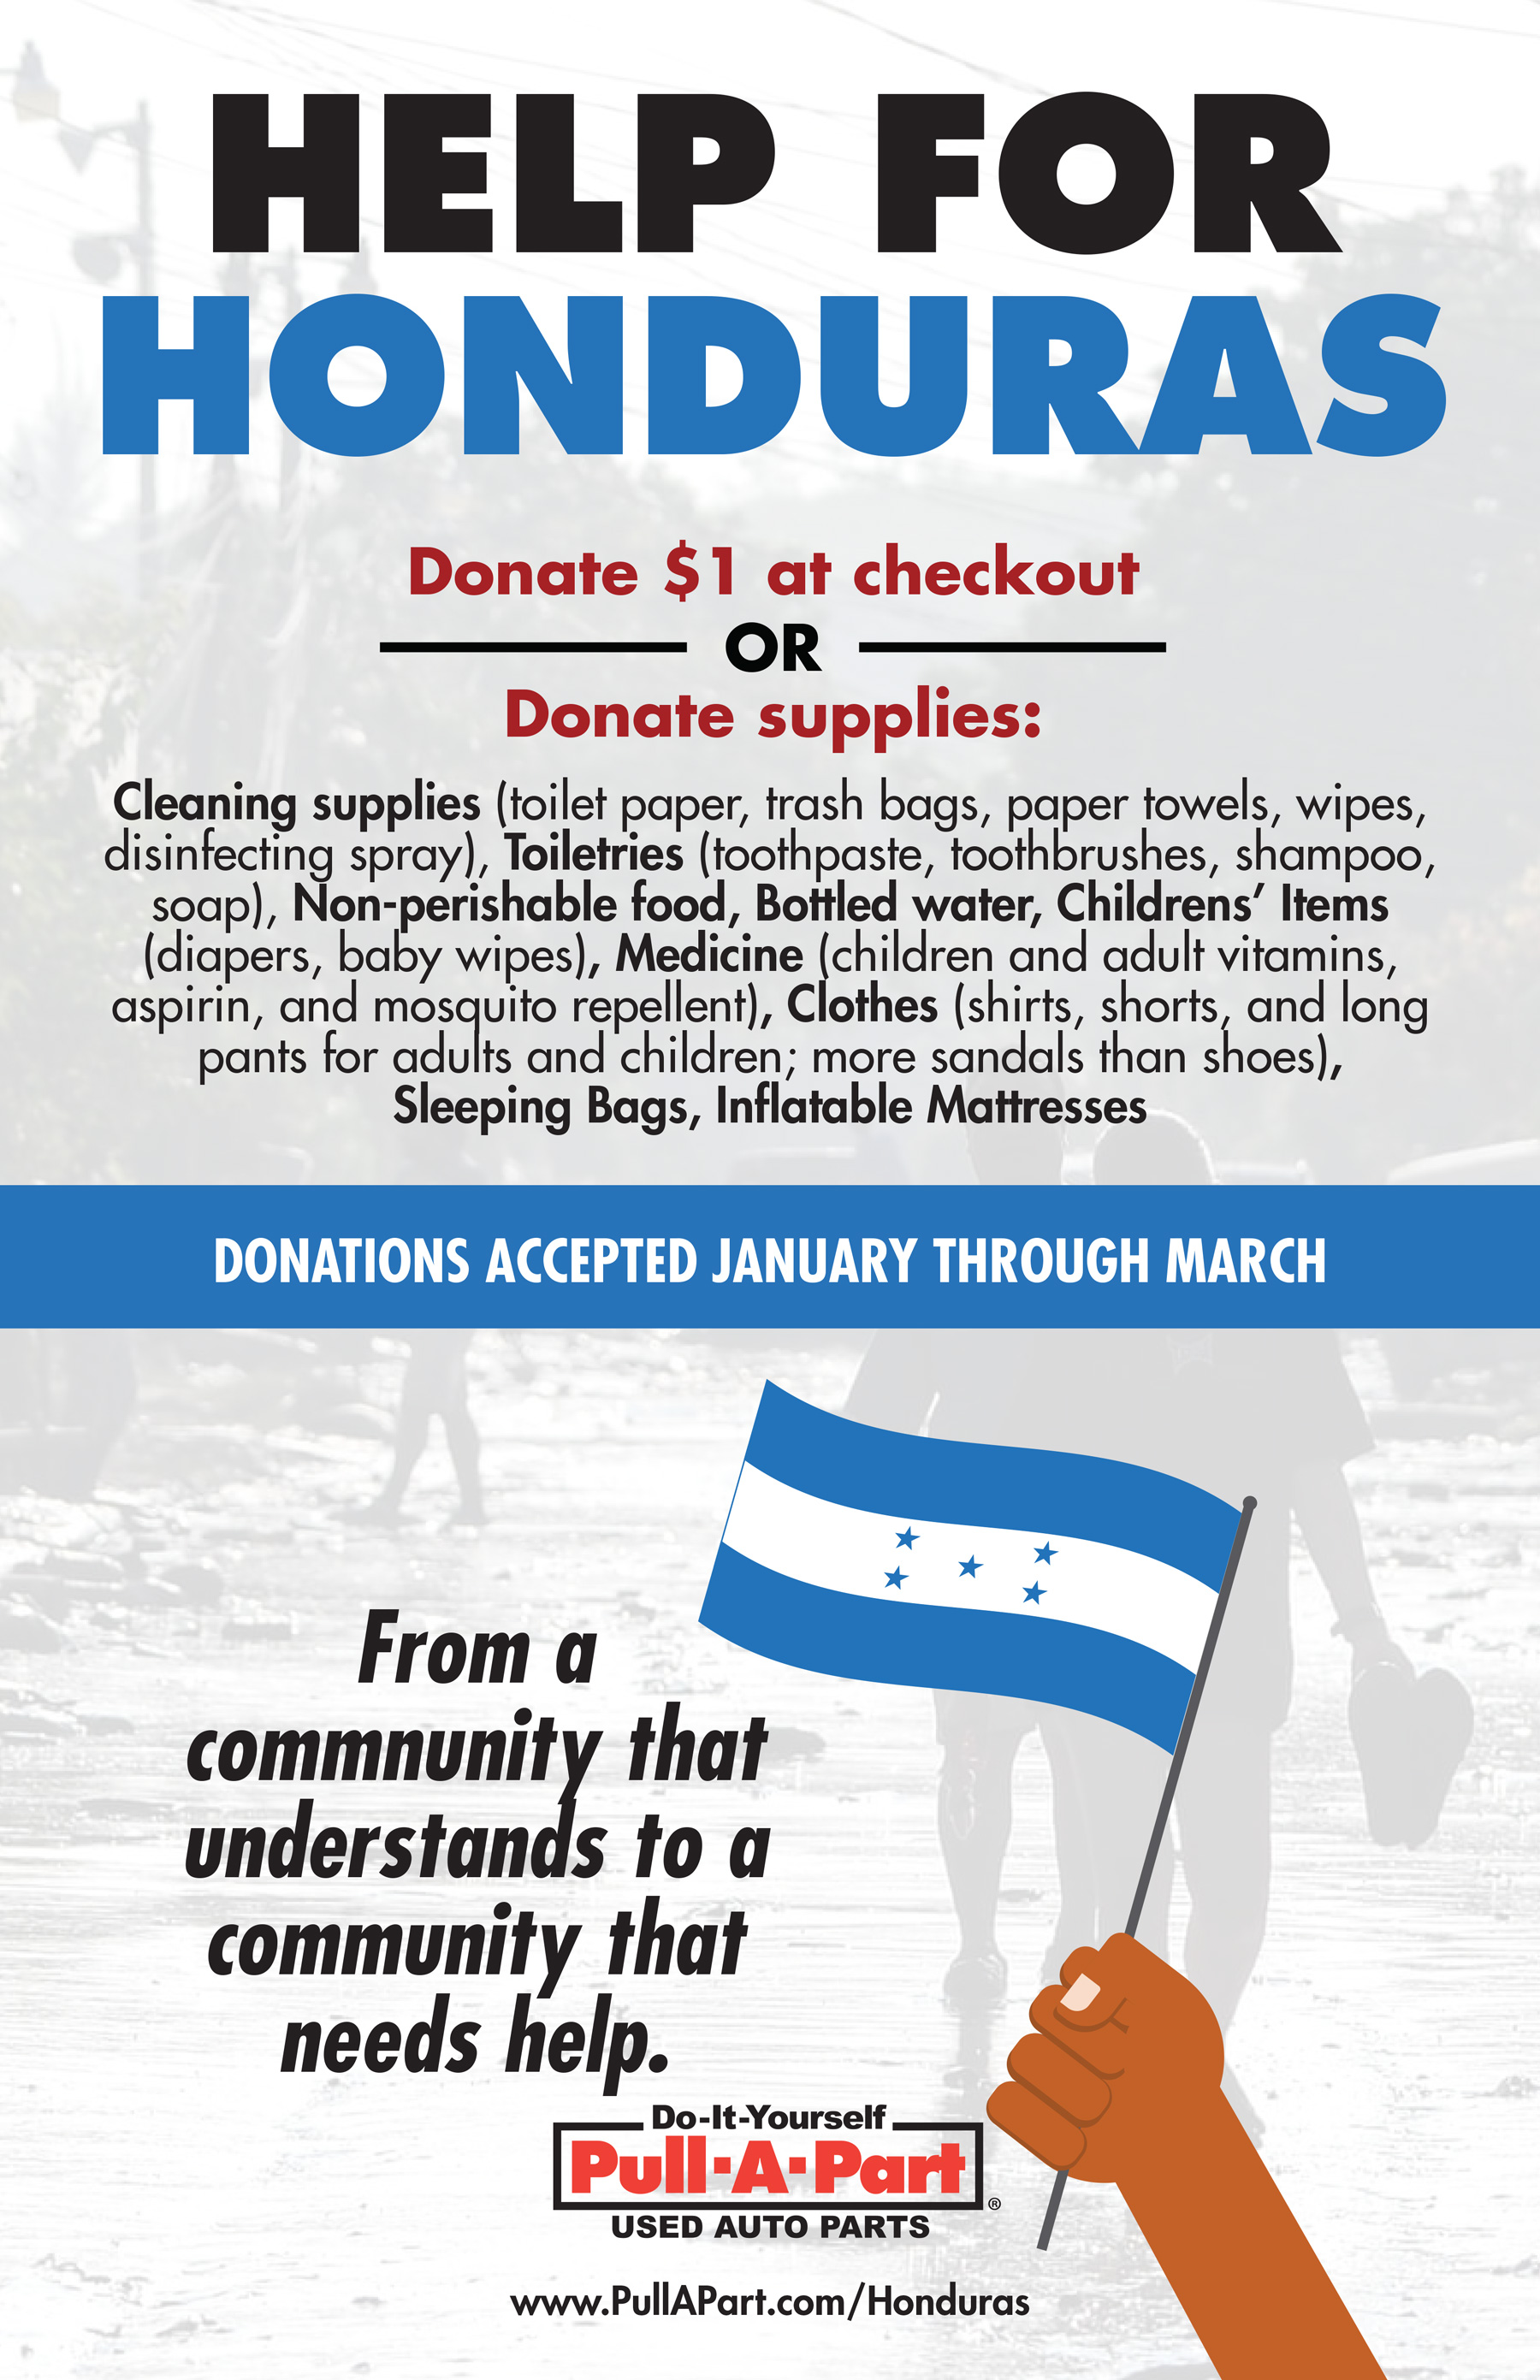 Help for Honduras